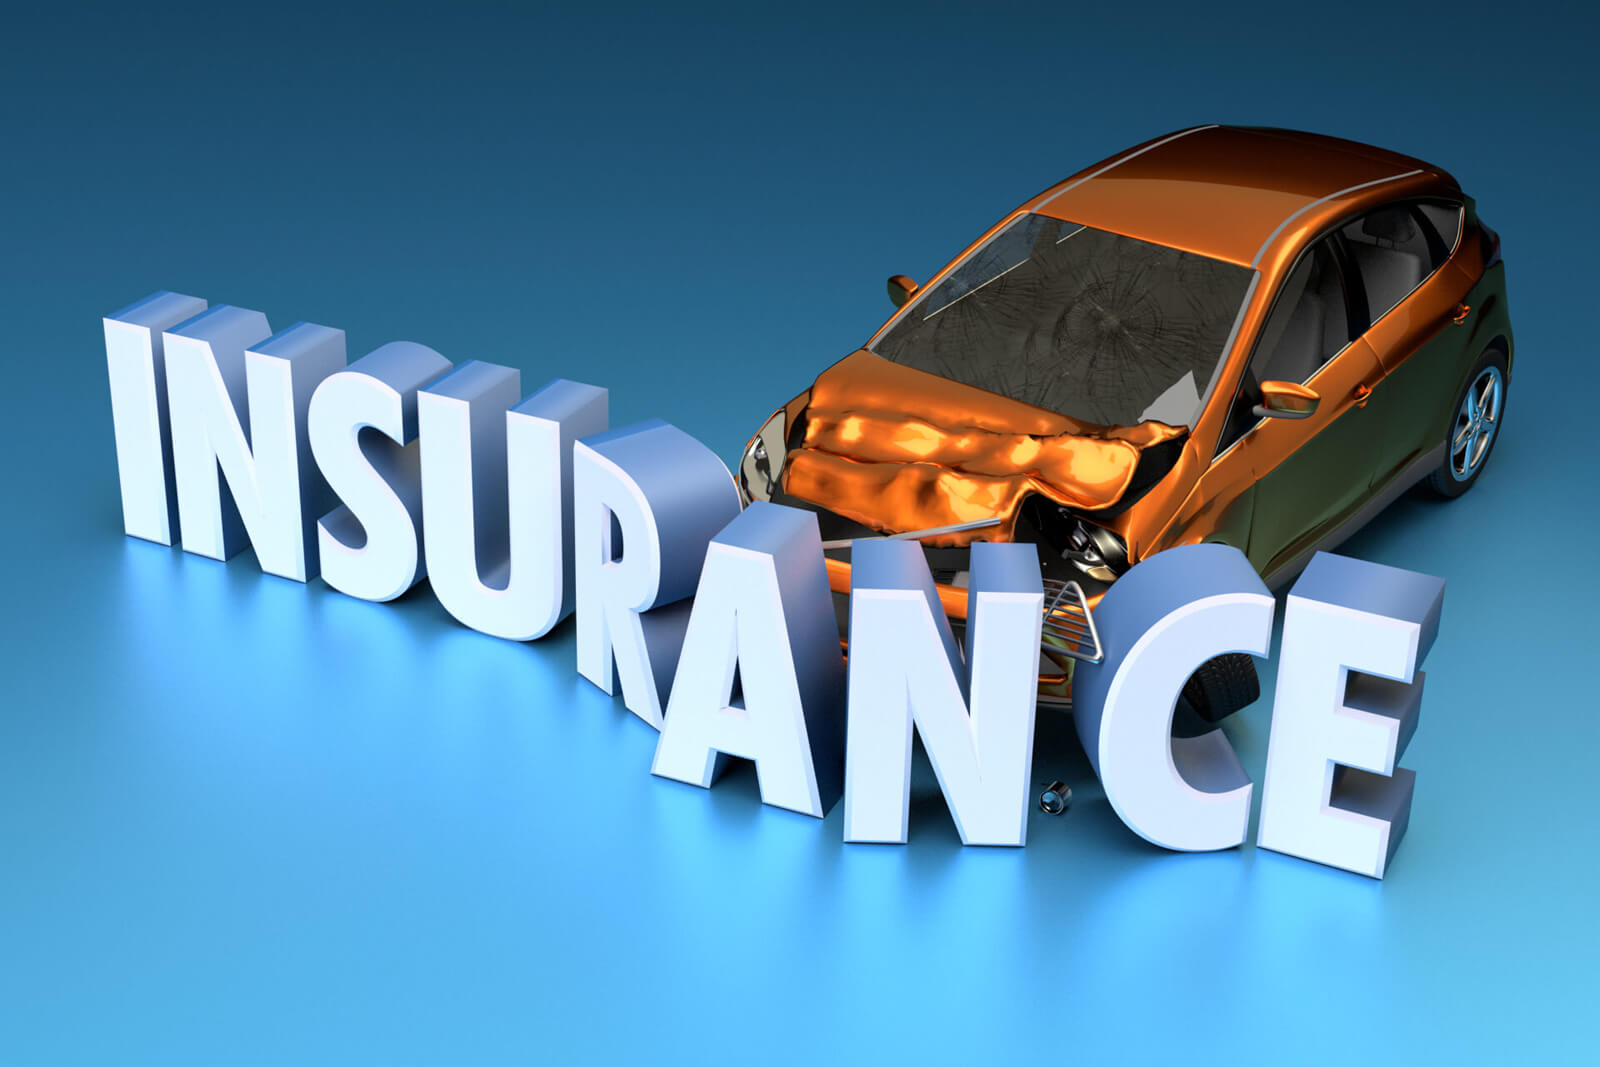 If I sell my car, is my insurance still valid?